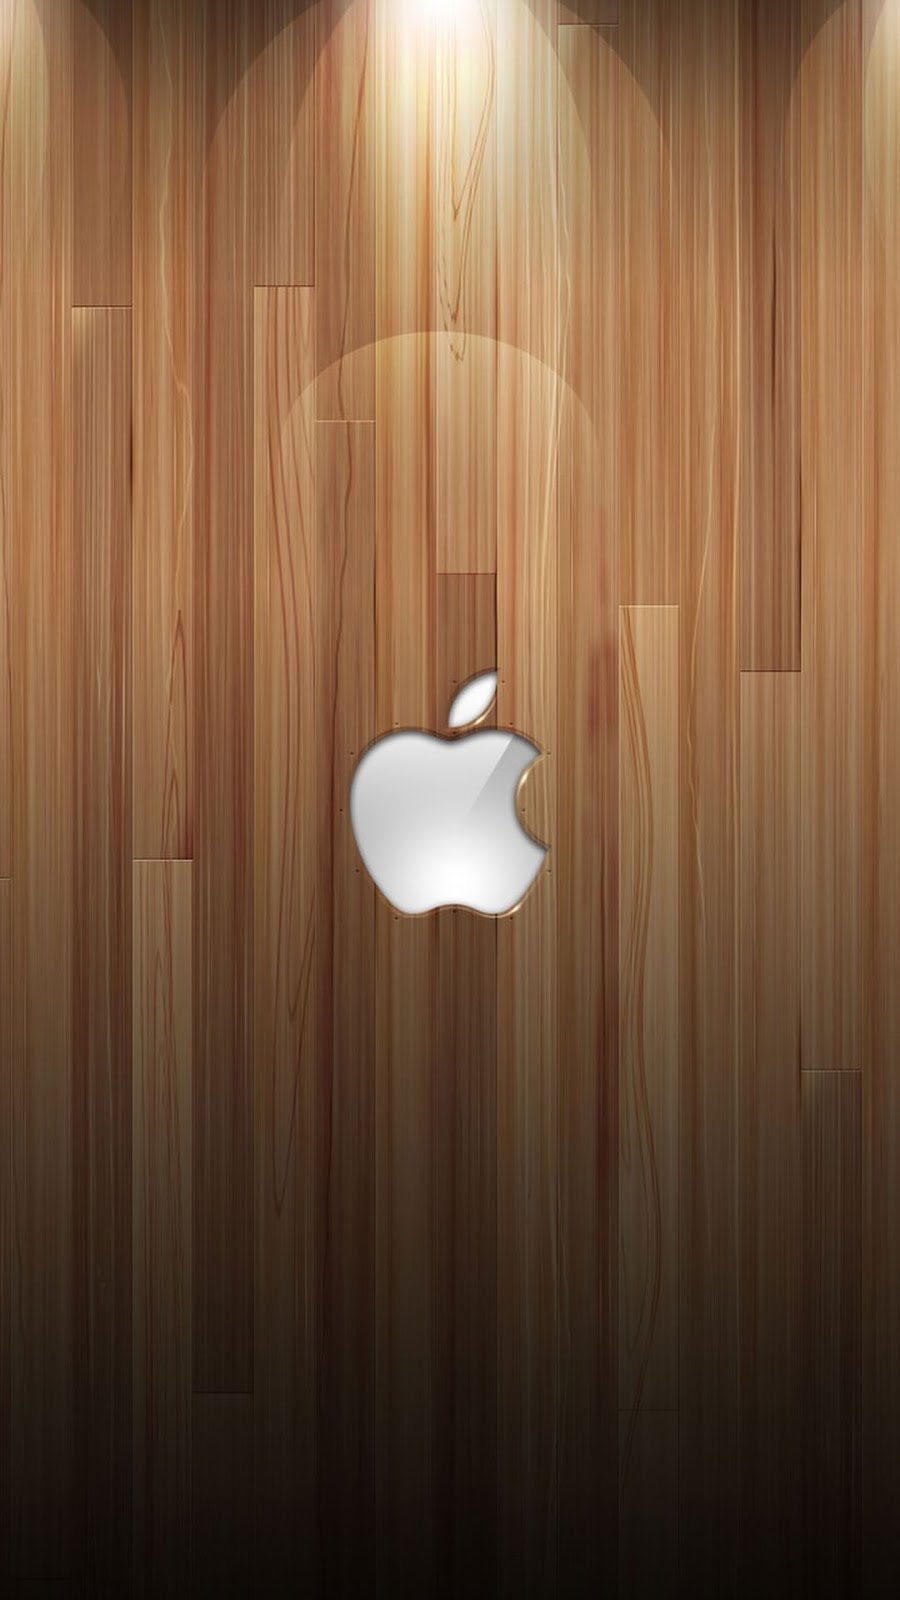 Iphone7 Iphone6 壁紙box 木目と白いアップルのロゴ 壁紙